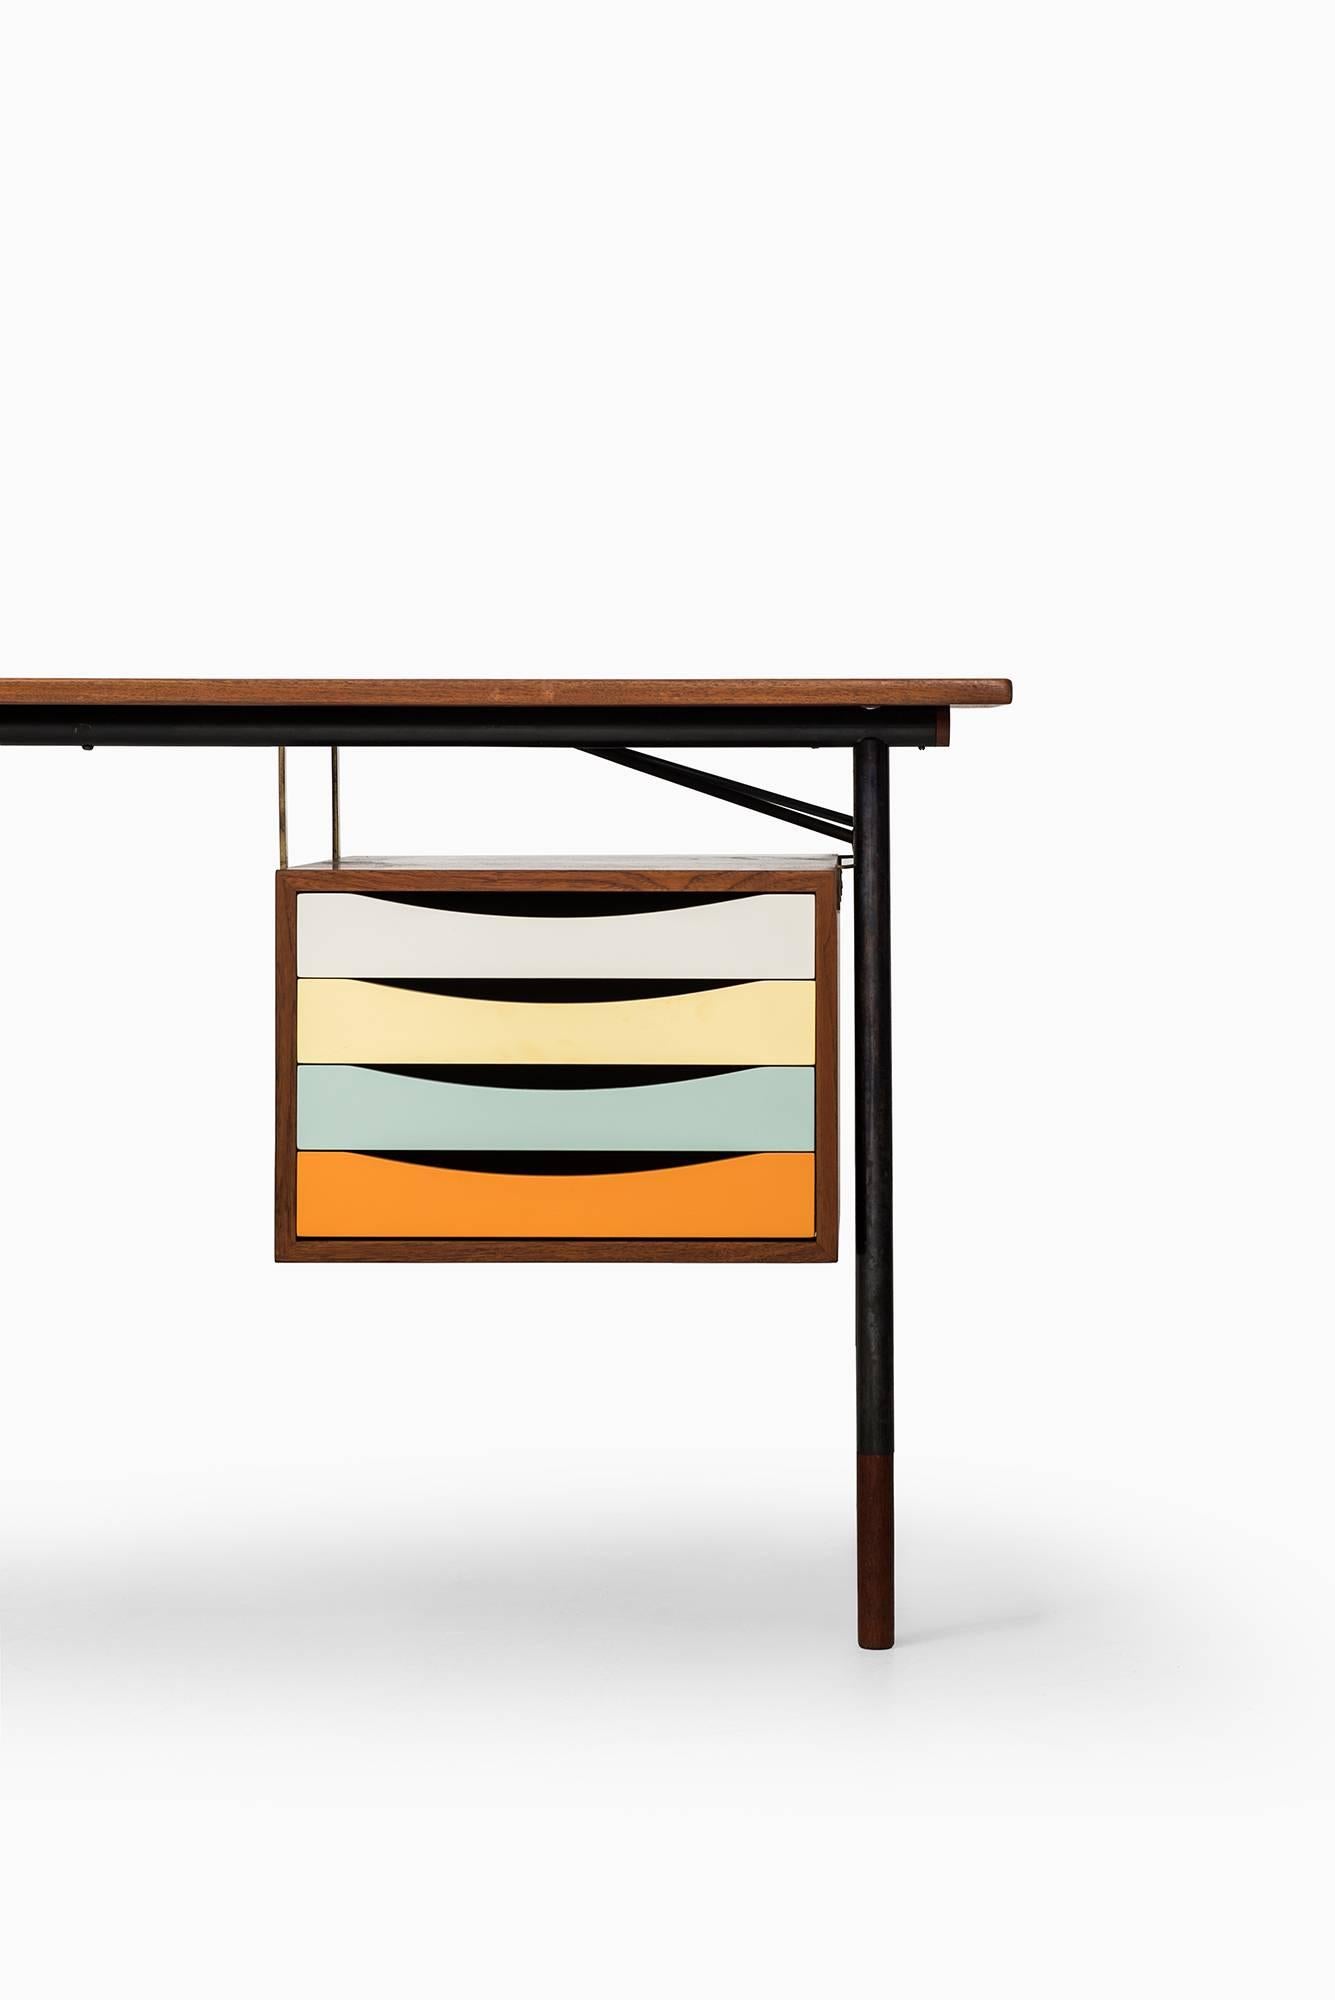 Rare desk model BO-69 / Nyhavn with organizer box designed by Finn Juhl. Produced by Bovirke in Denmark.